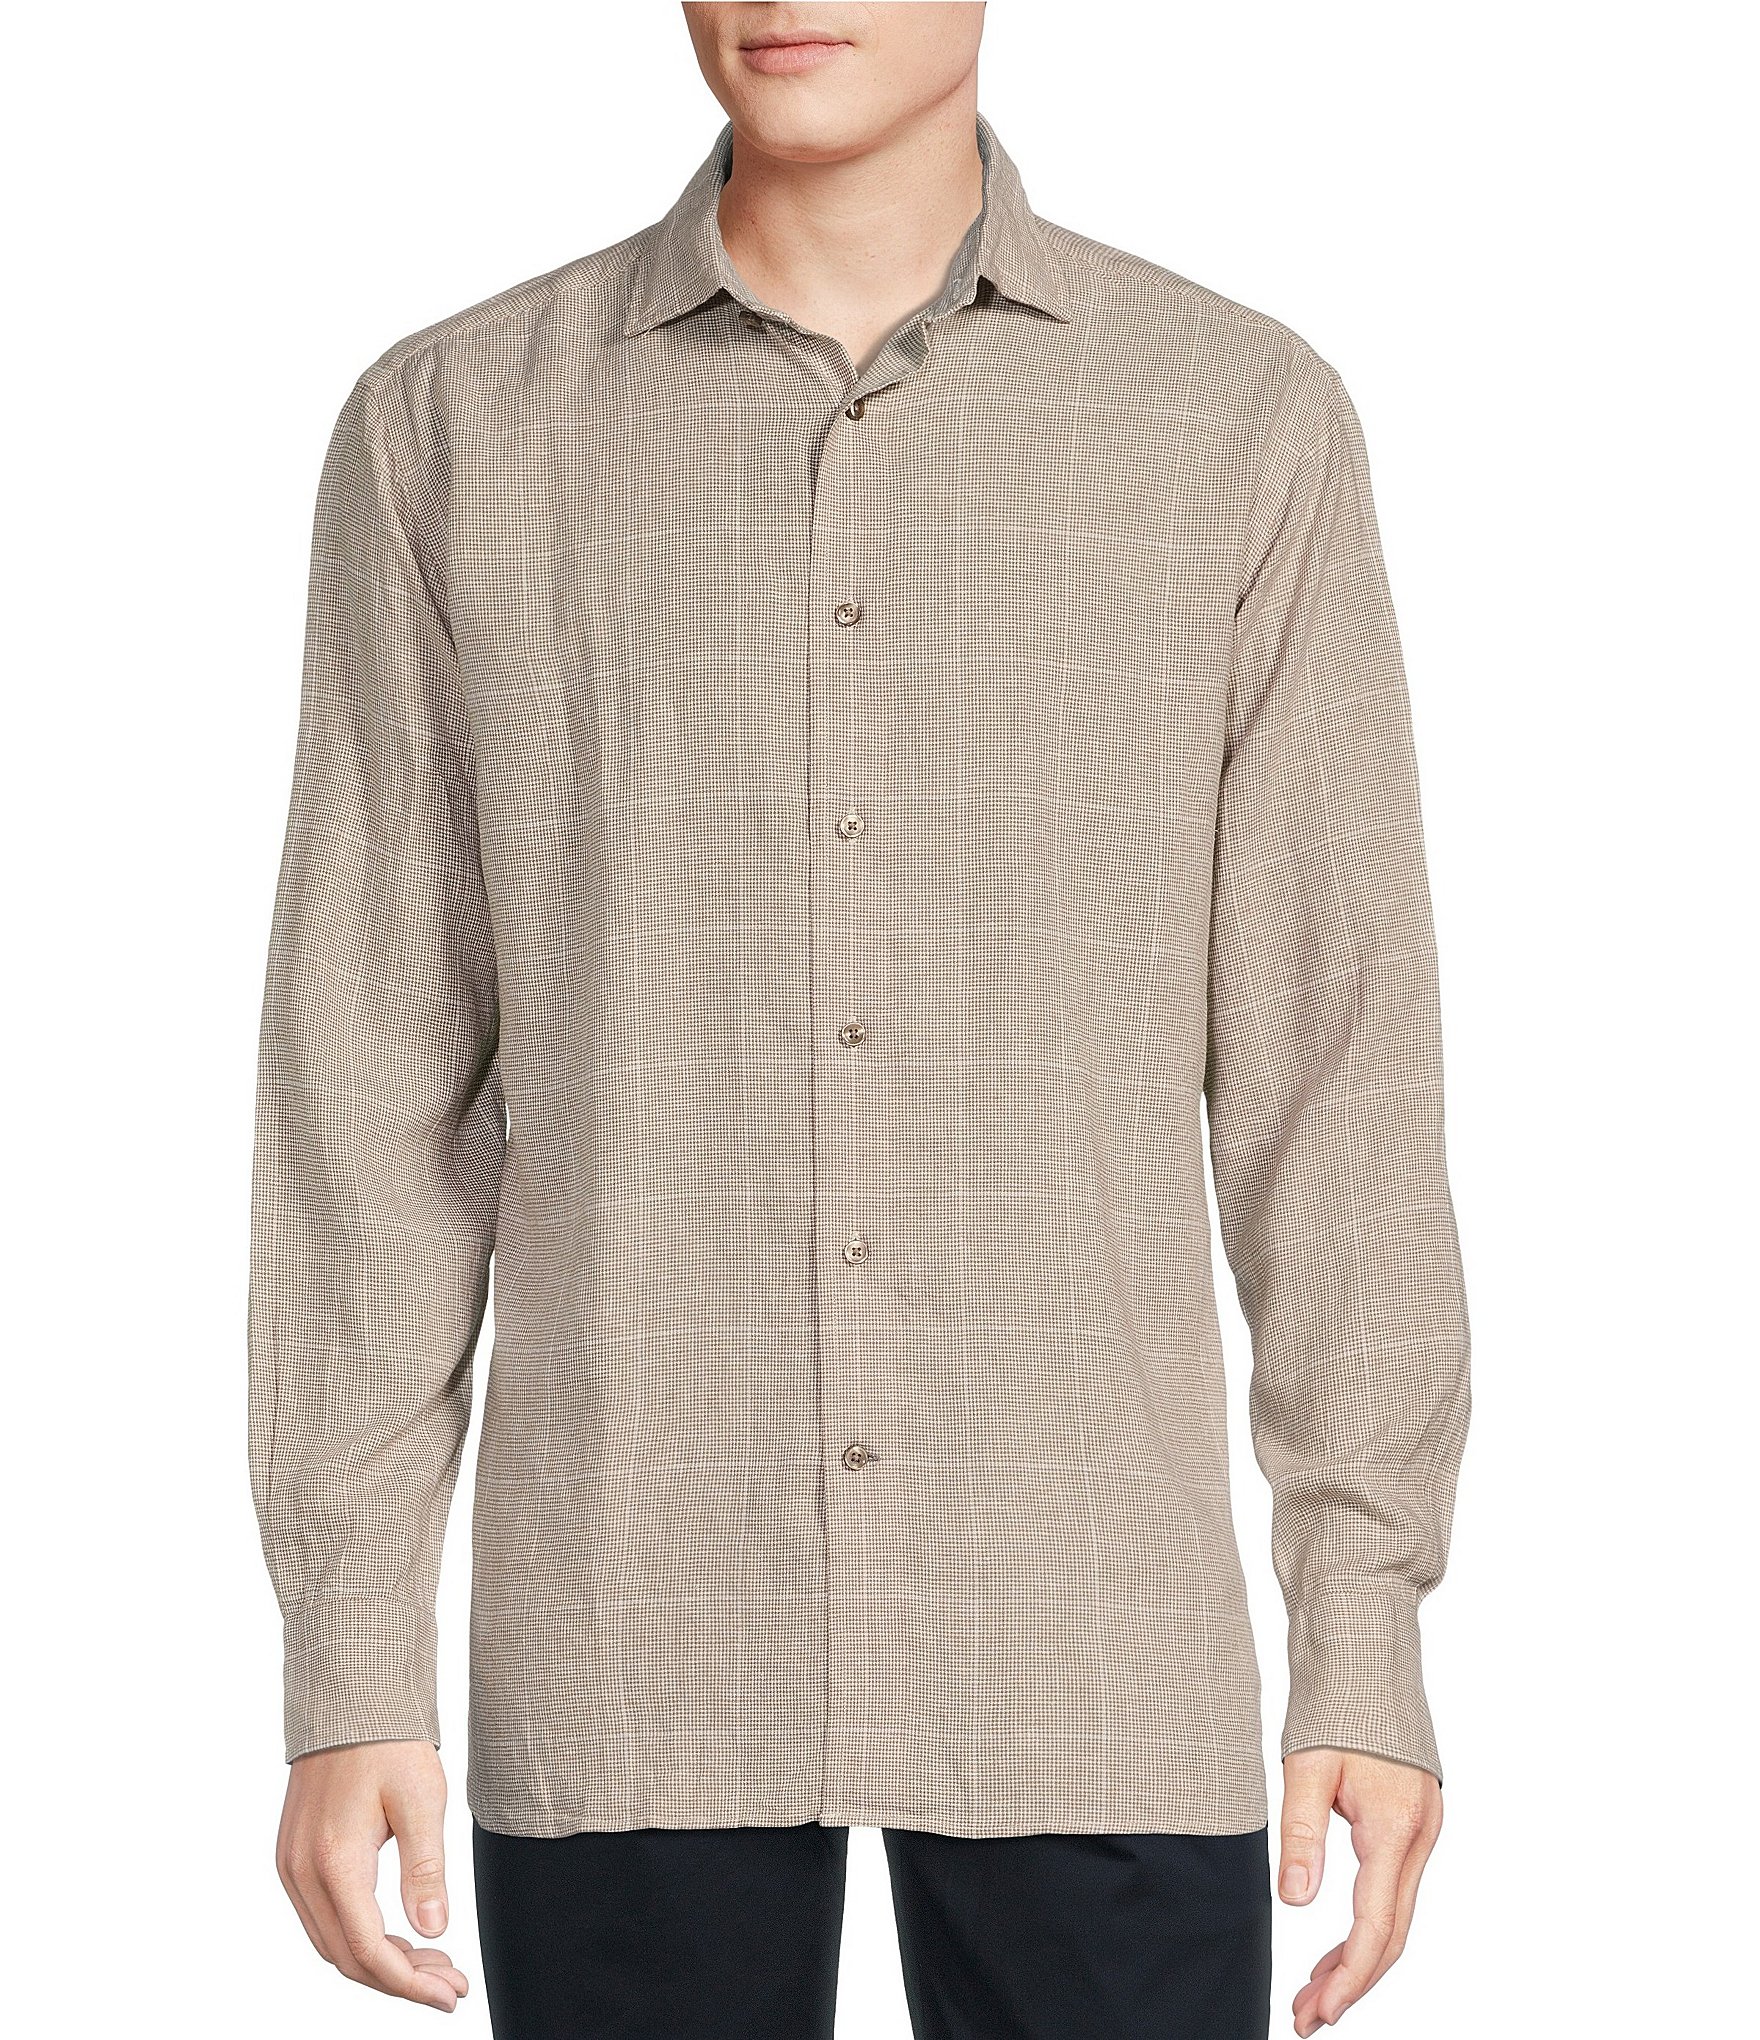 Signature Regular Multipockets Long-Sleeved Shirt - Ready-to-Wear